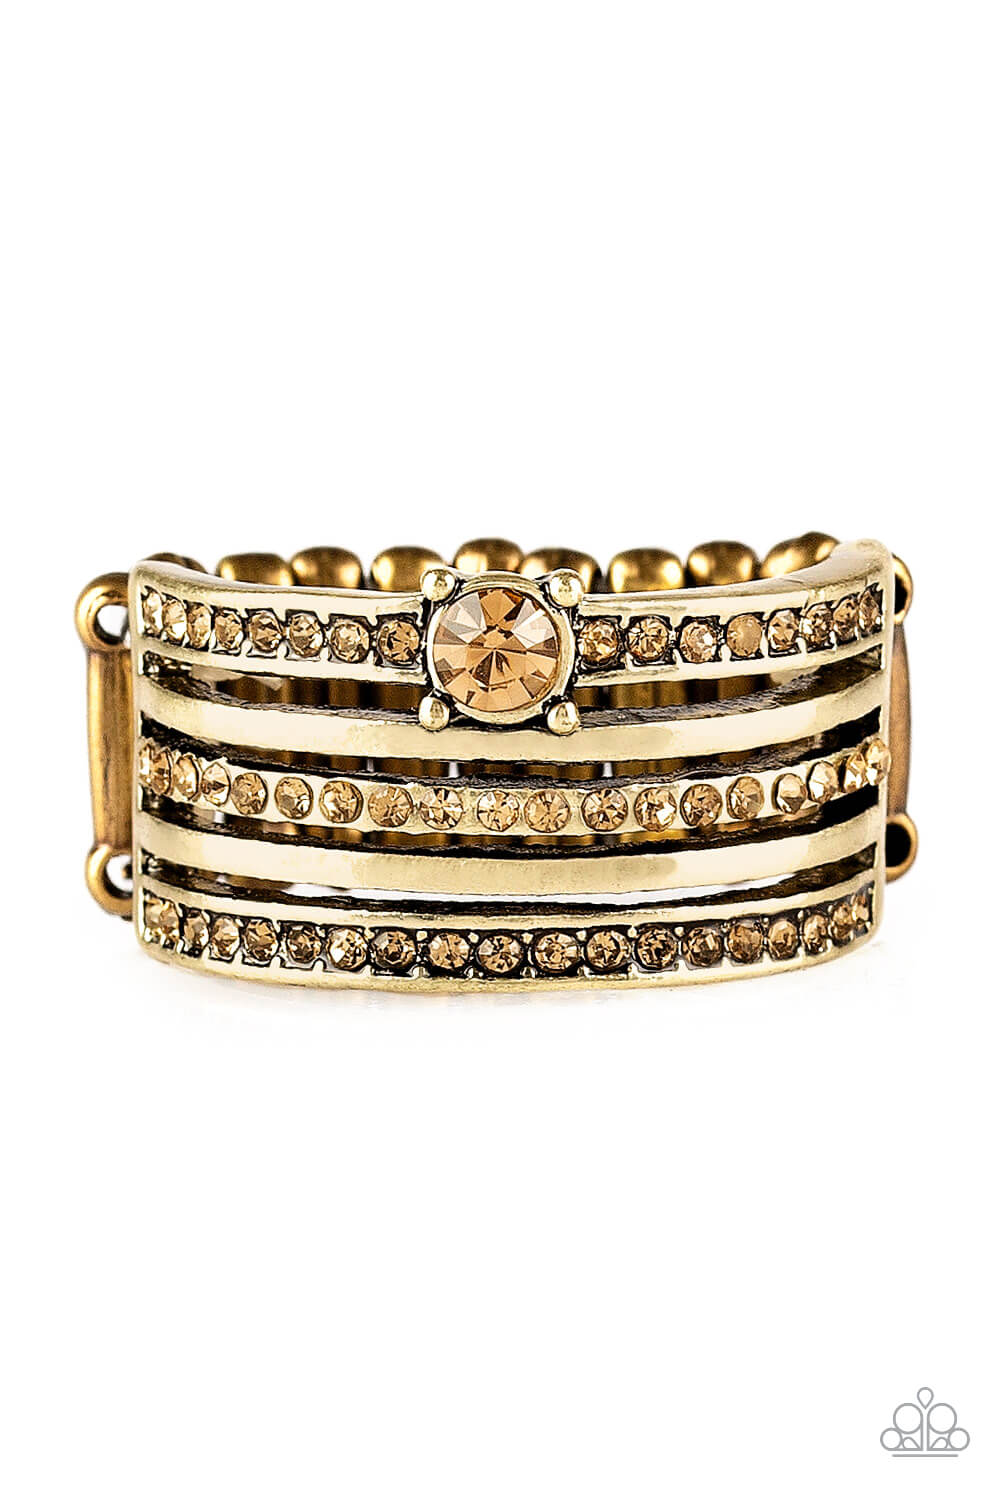 The Dealmaker - Brass Ring - Princess Glam Shop